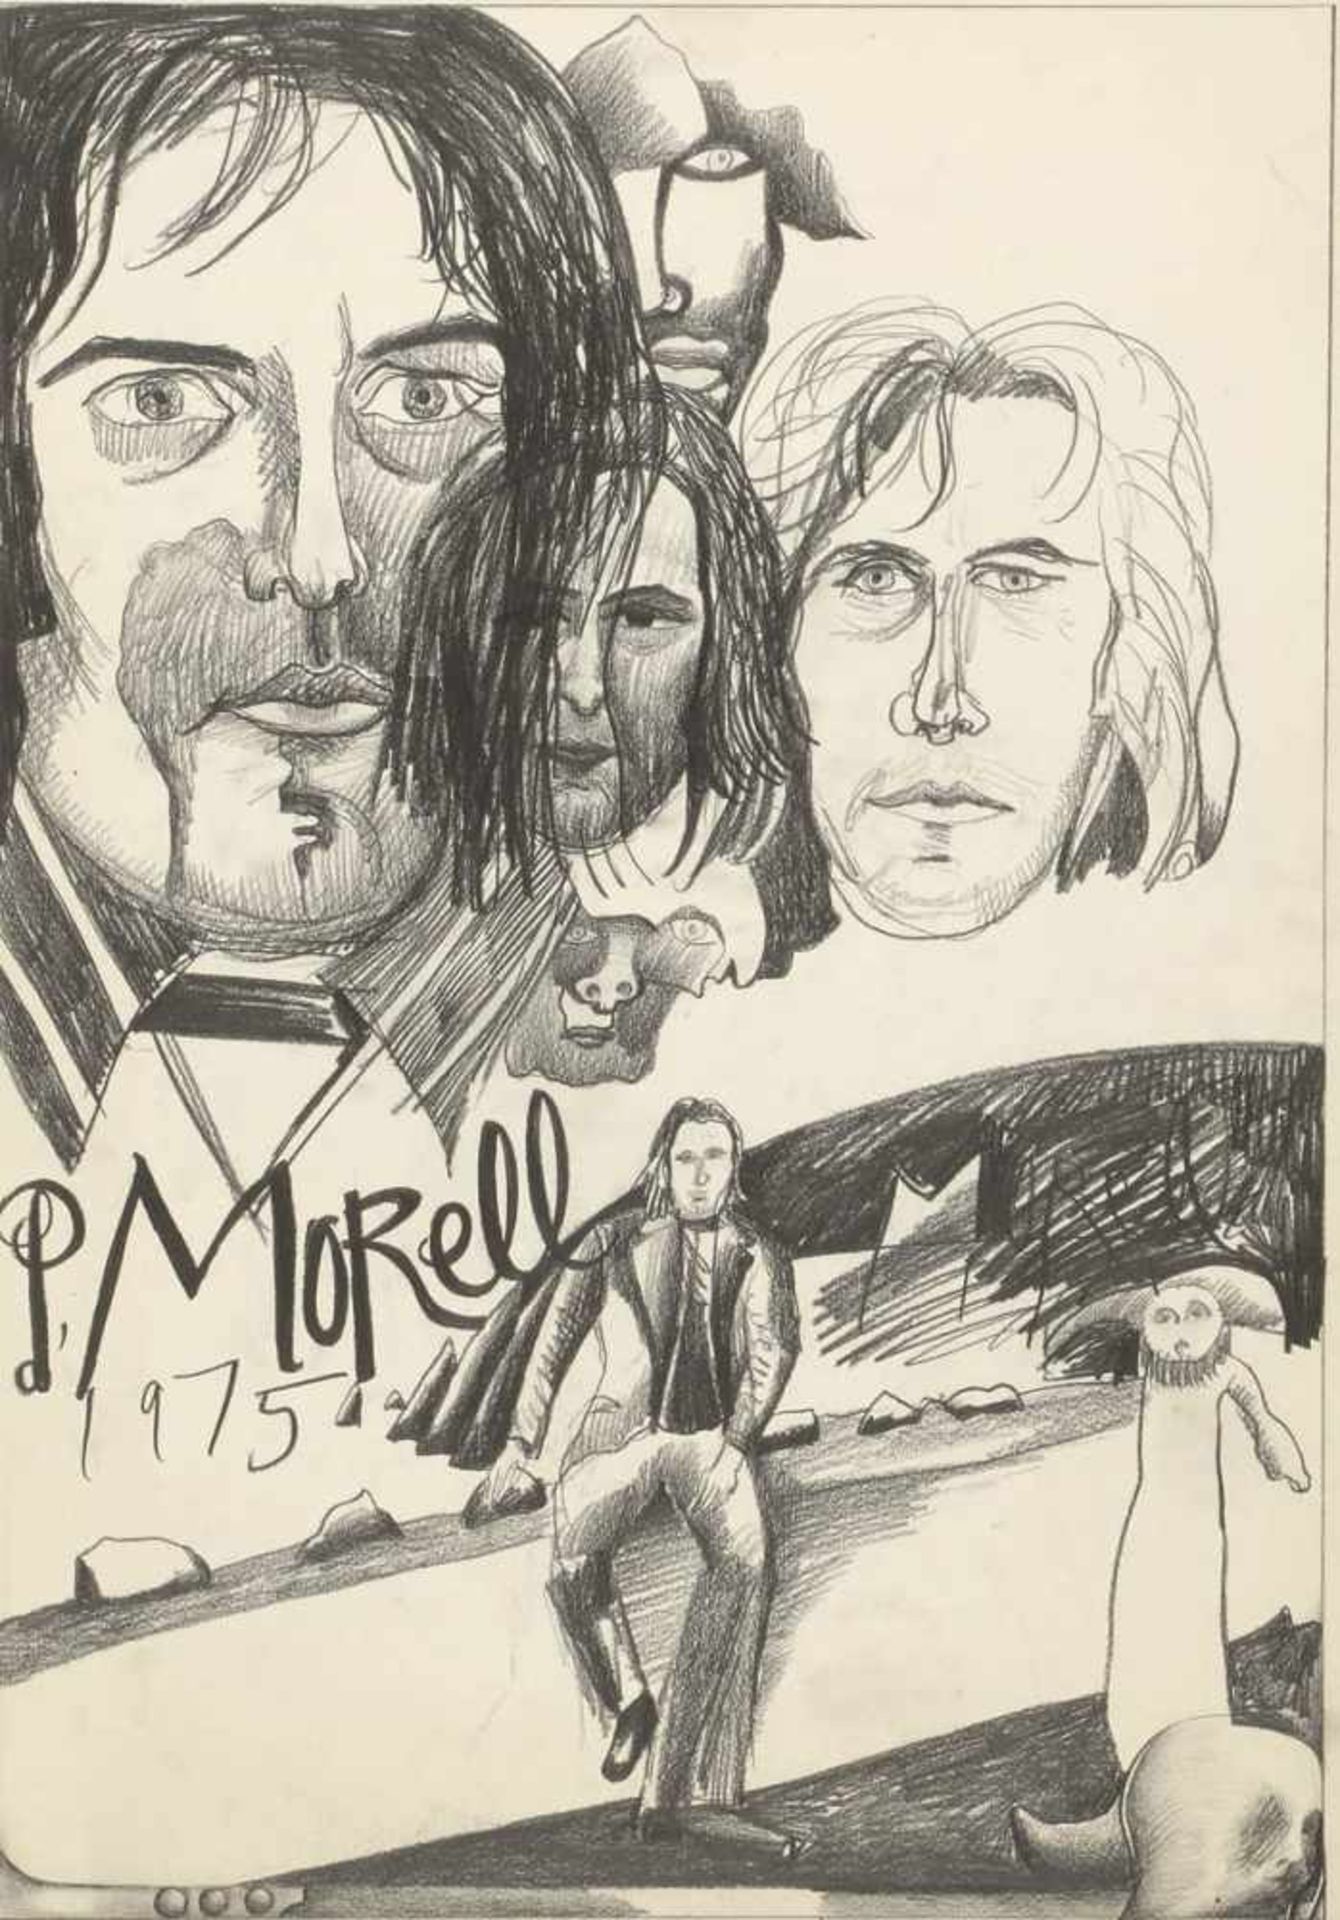 Pit Morell1939 Kassel - lebt und arbeitet in Worpswede - Kalenderdeckblatt: "P. Morell 1975" -